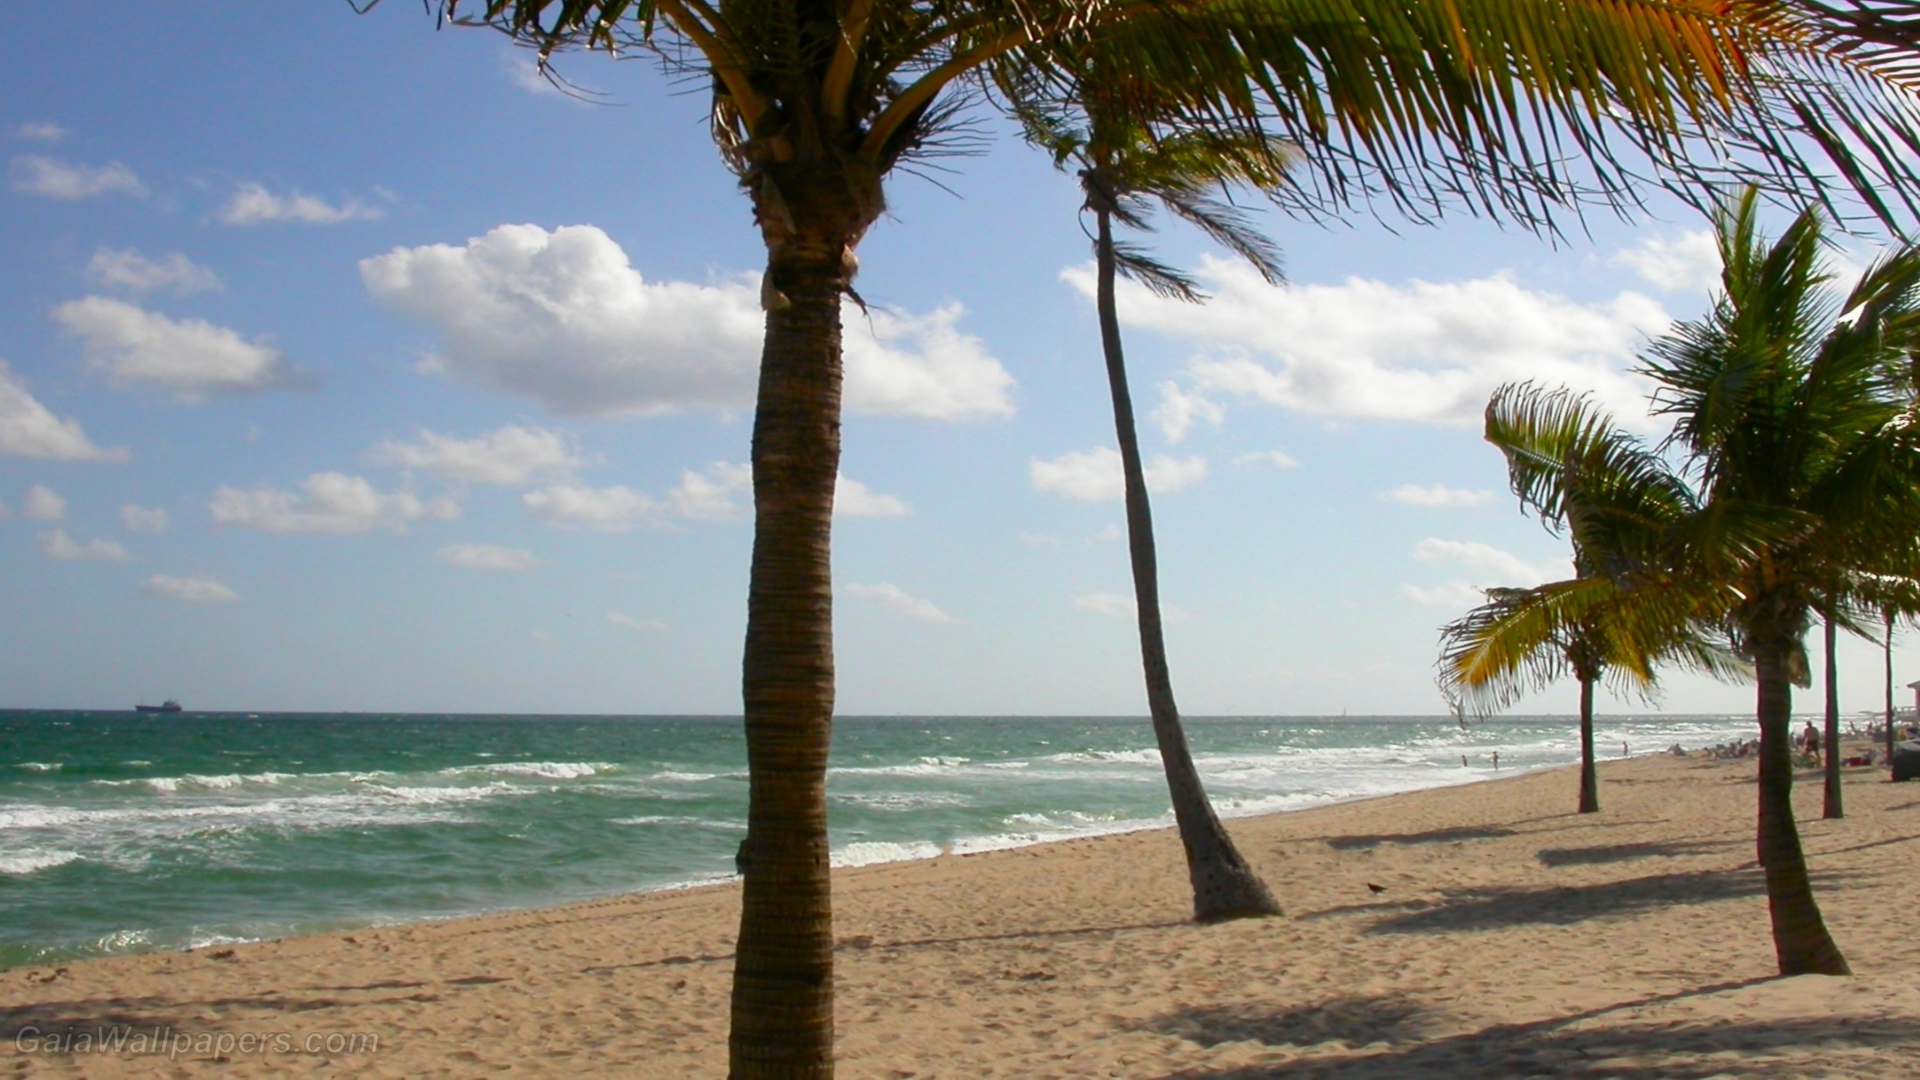 Windy Florida beach - Free desktop wallpapers